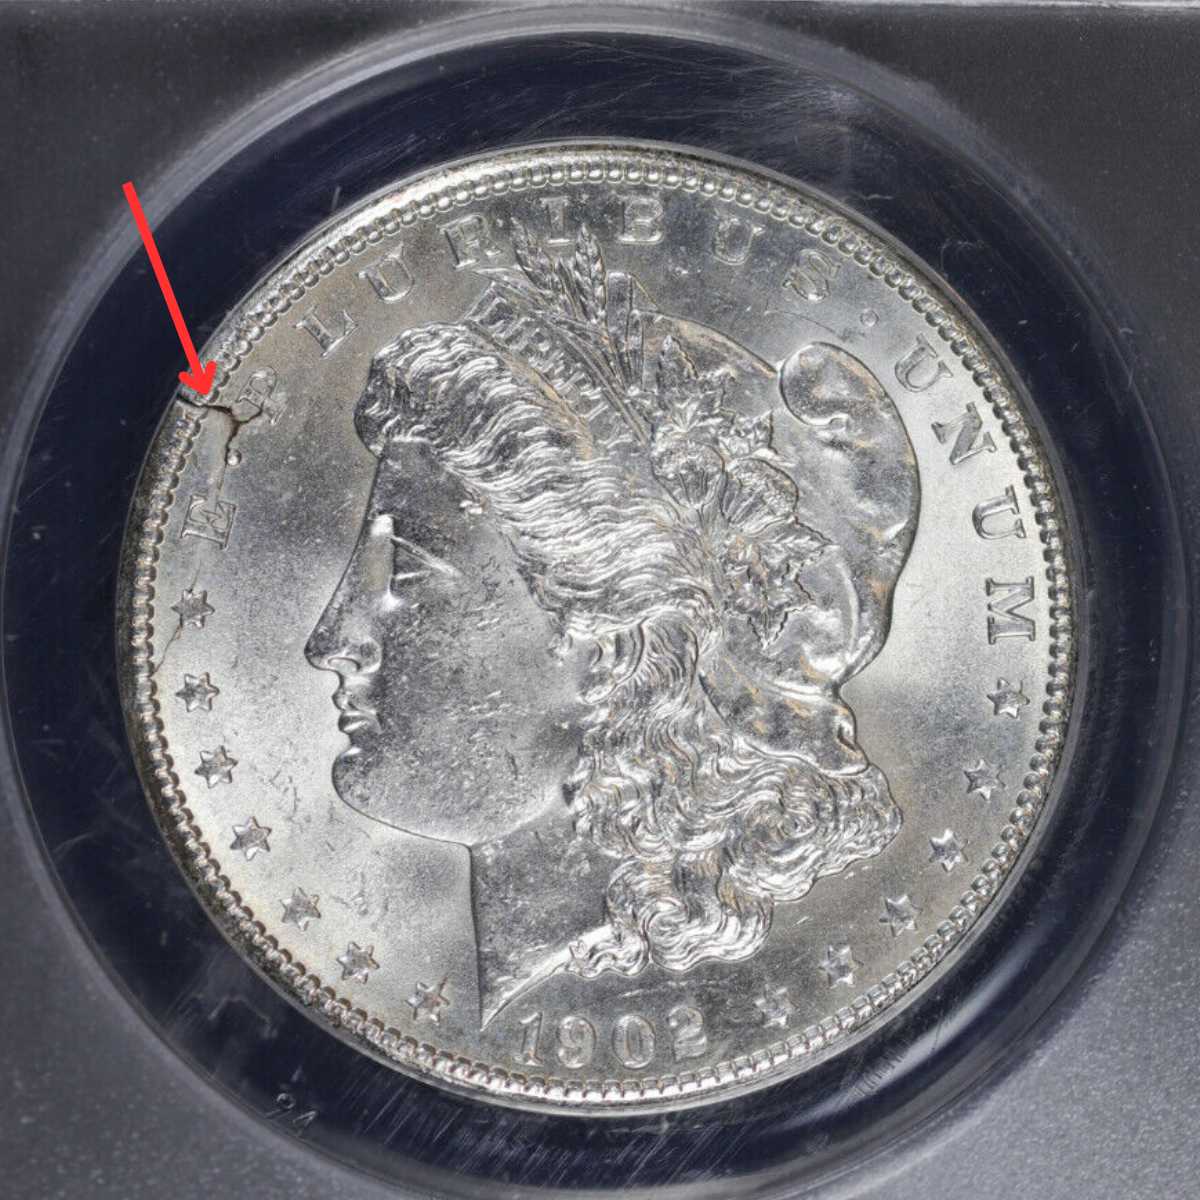 1902-O Silver Dollar Struck on Cracked Planchet